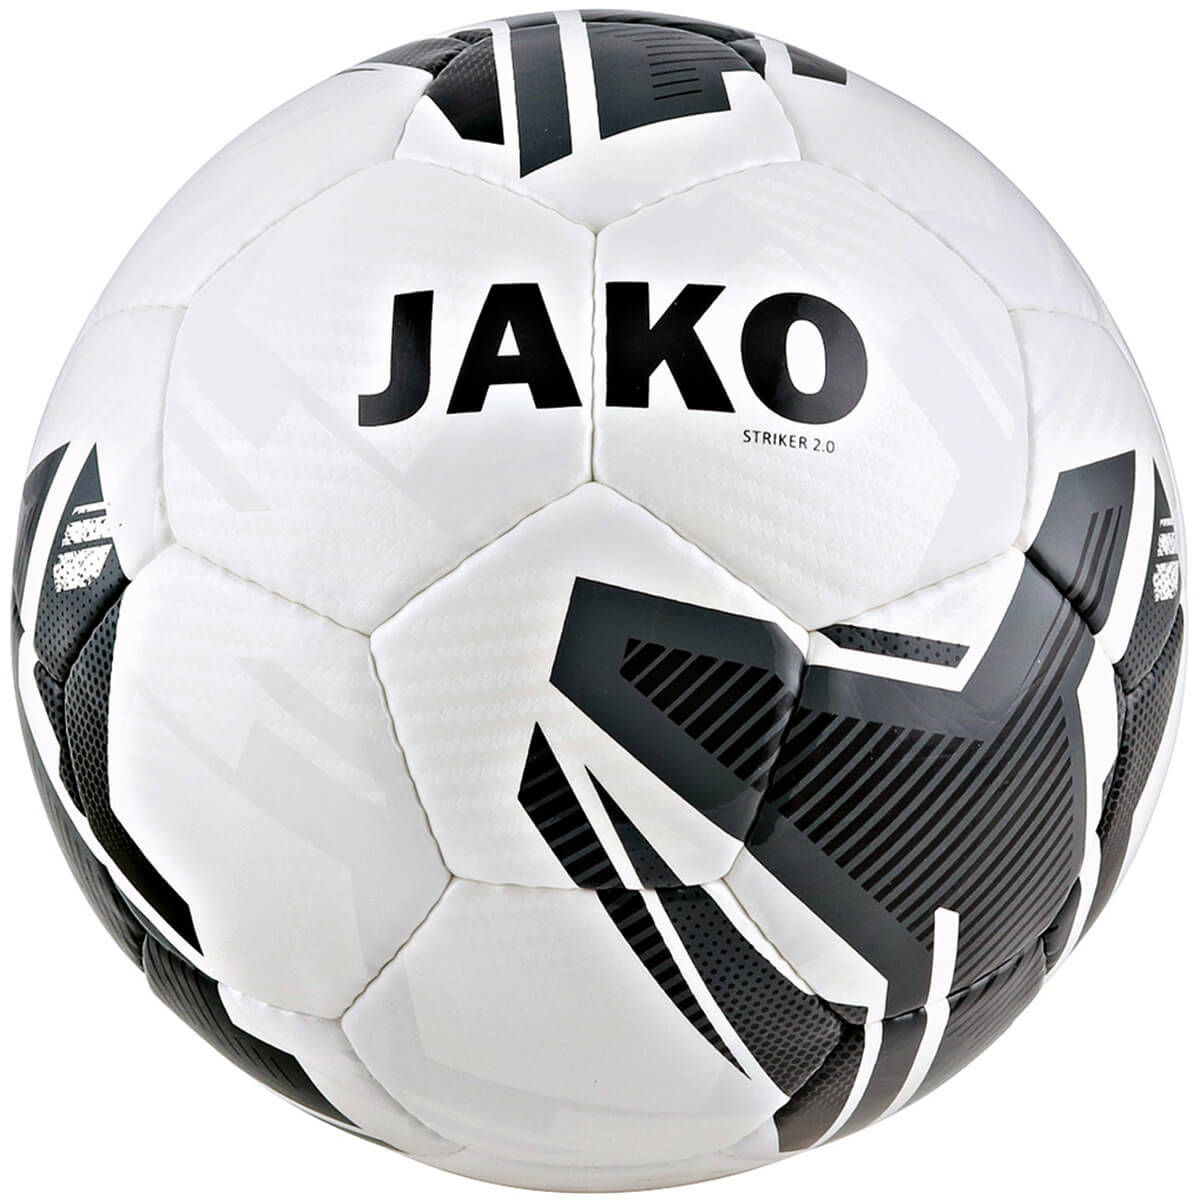 JAKO 2353-21 Ballon Entraînement Striker 2.0 Blanc/Anthracite